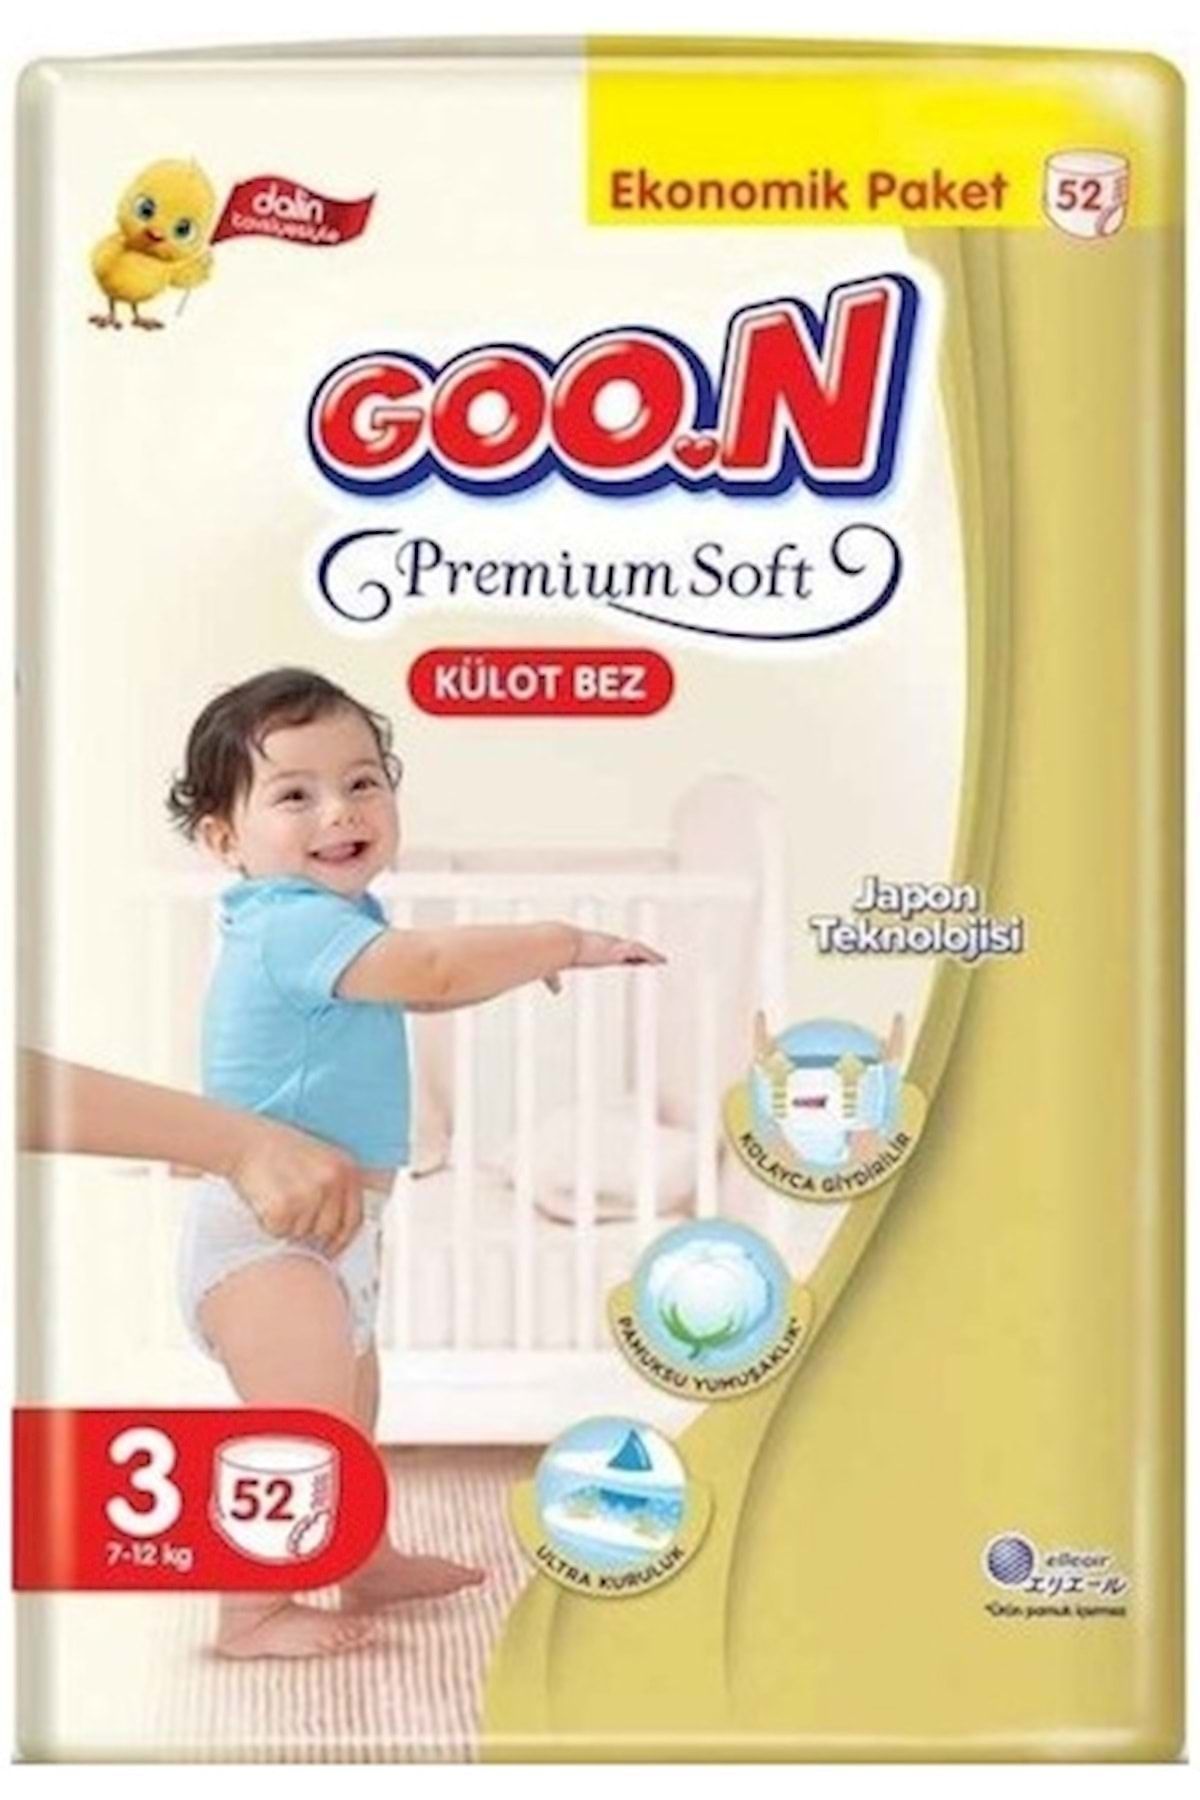 Goo.n Goon Premium Soft Dev Külot Bez Beden:3 (7-12kg) Midi 52 Adet Bebek Bezi